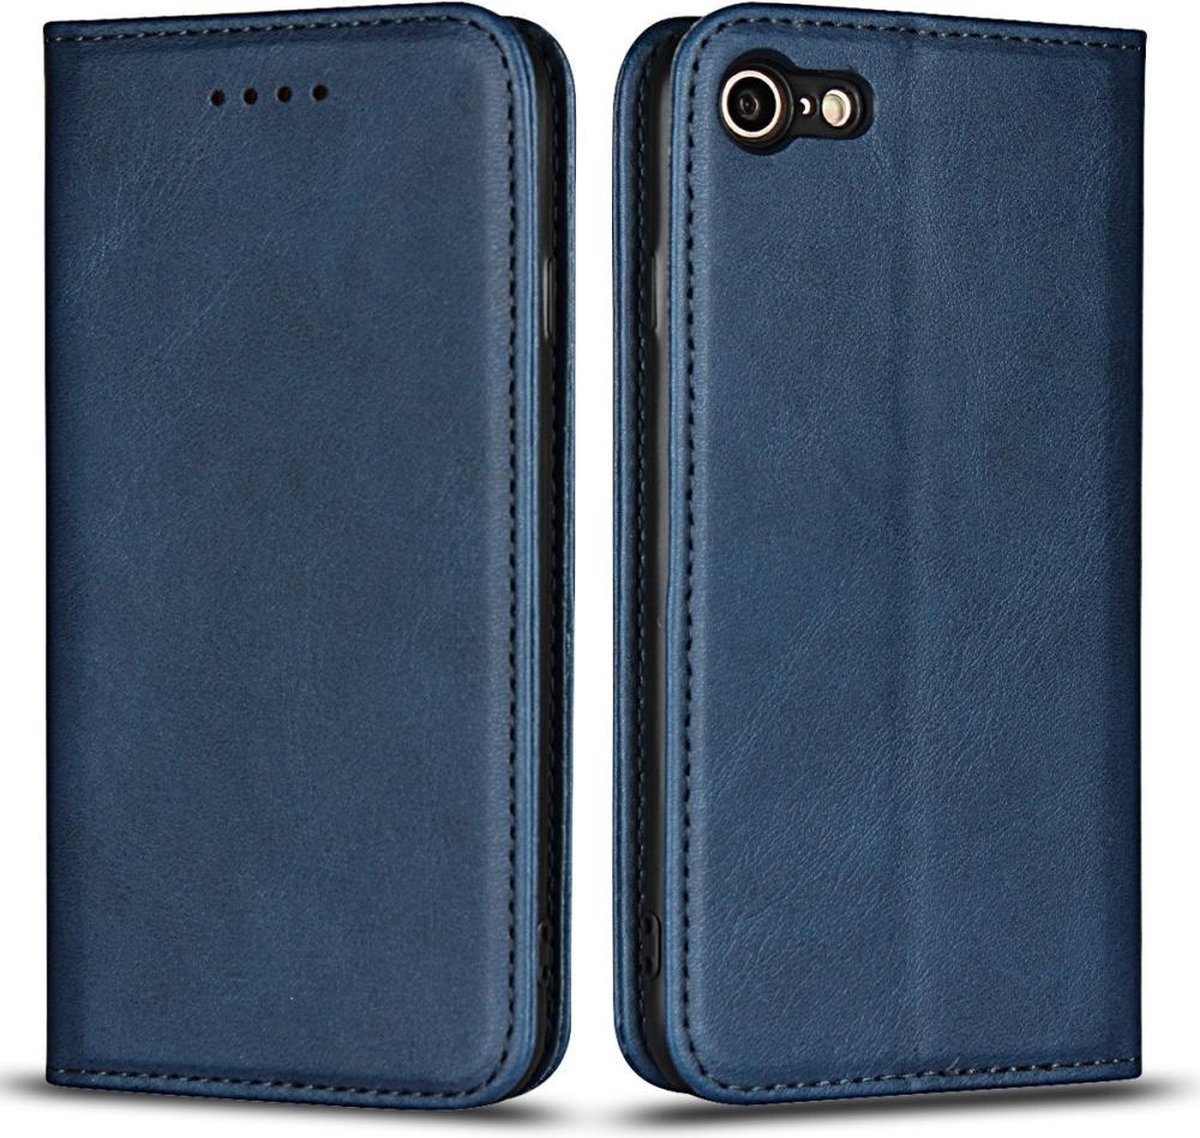 Casecentive Leren Wallet case - Portemonnee hoesje - iPhone 7 / 8 / SE 2020 blauw